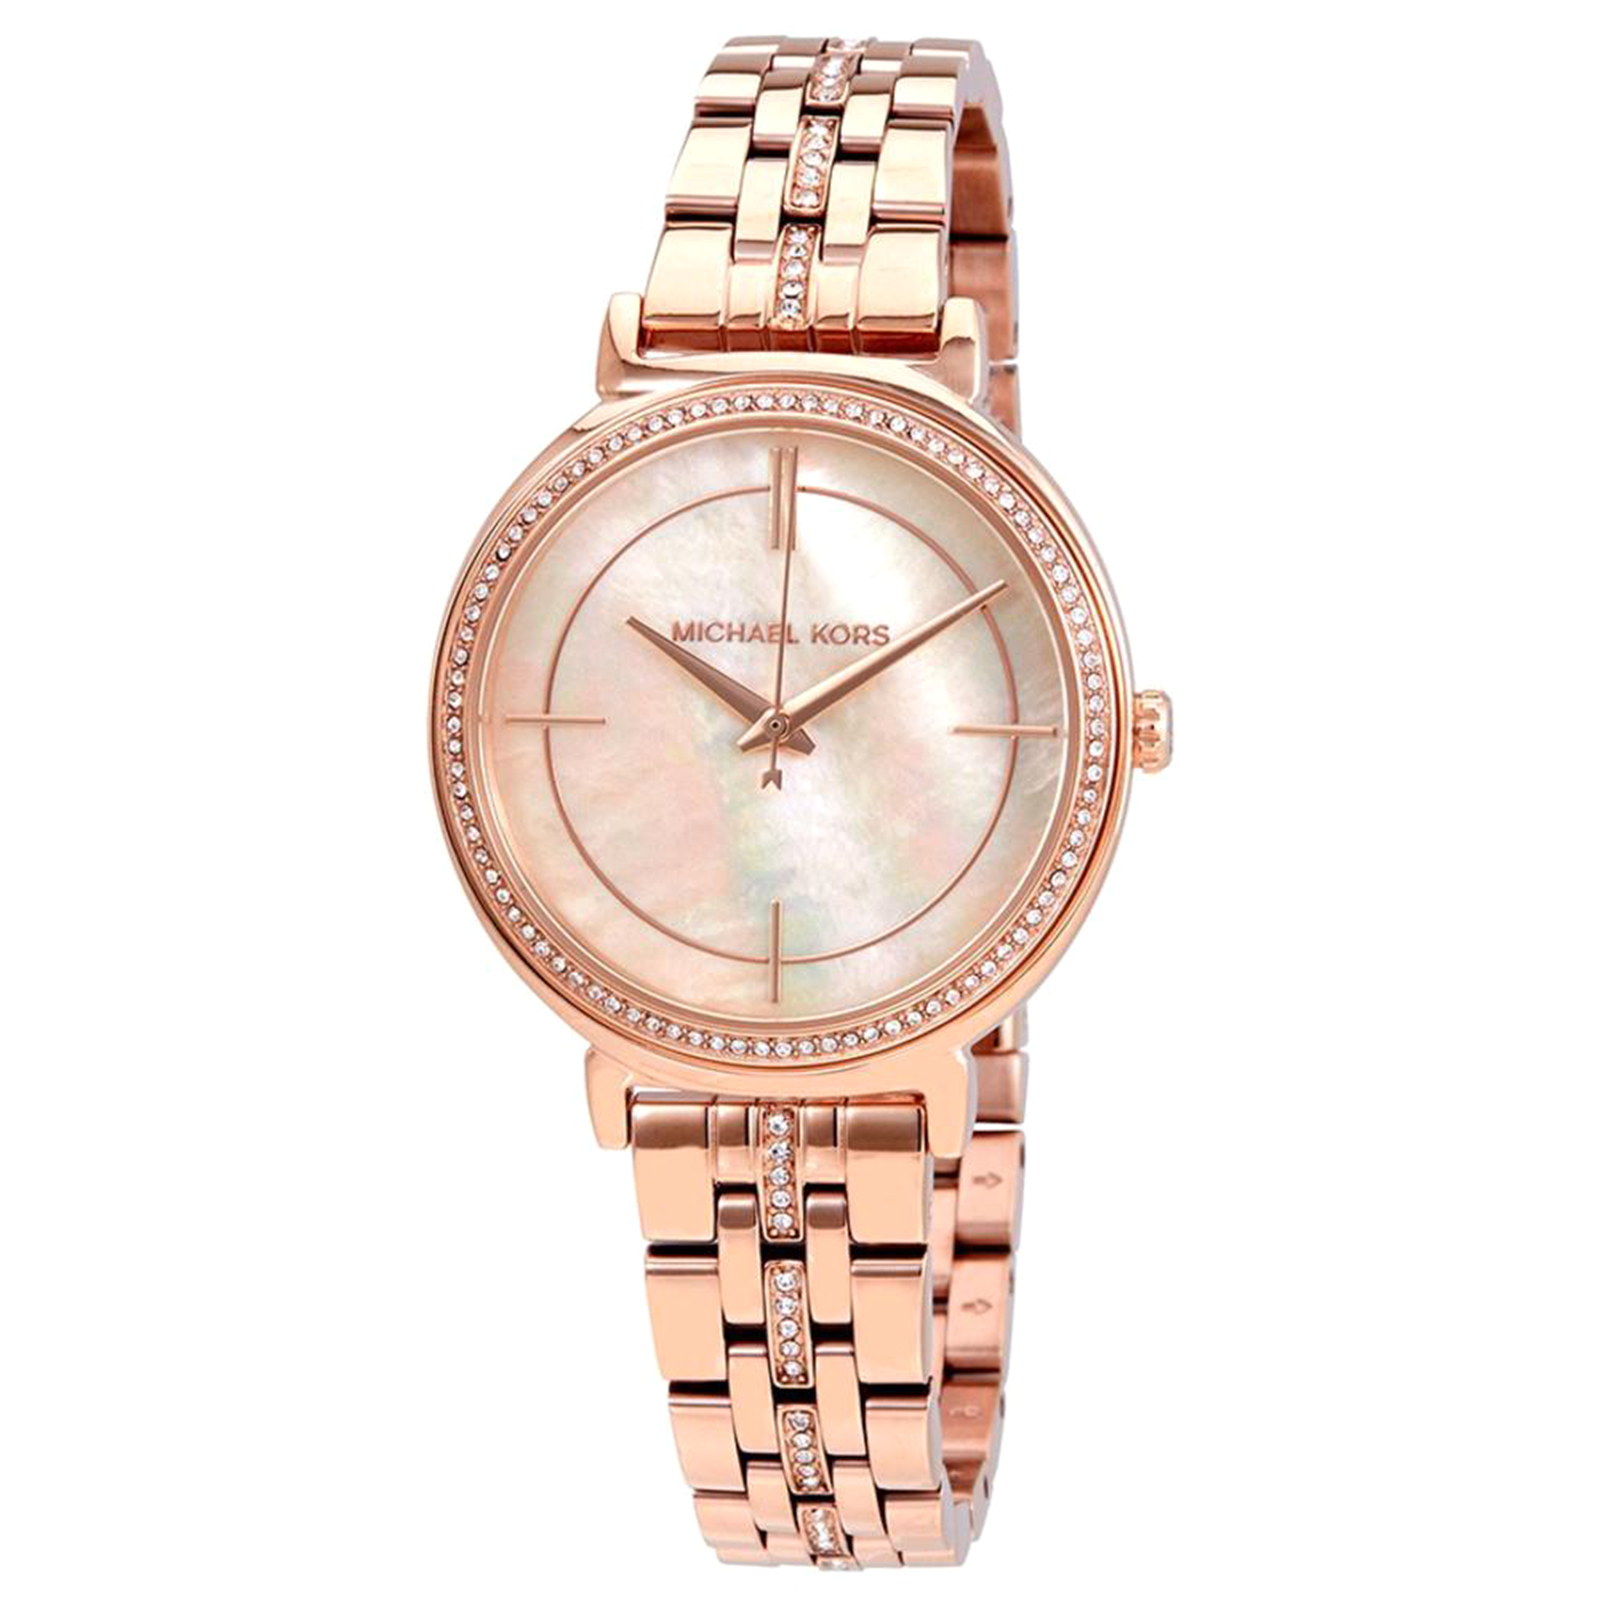 Michael Kors MK3643 Women's Cinthia Stainless Steel Watch - Rose Gold